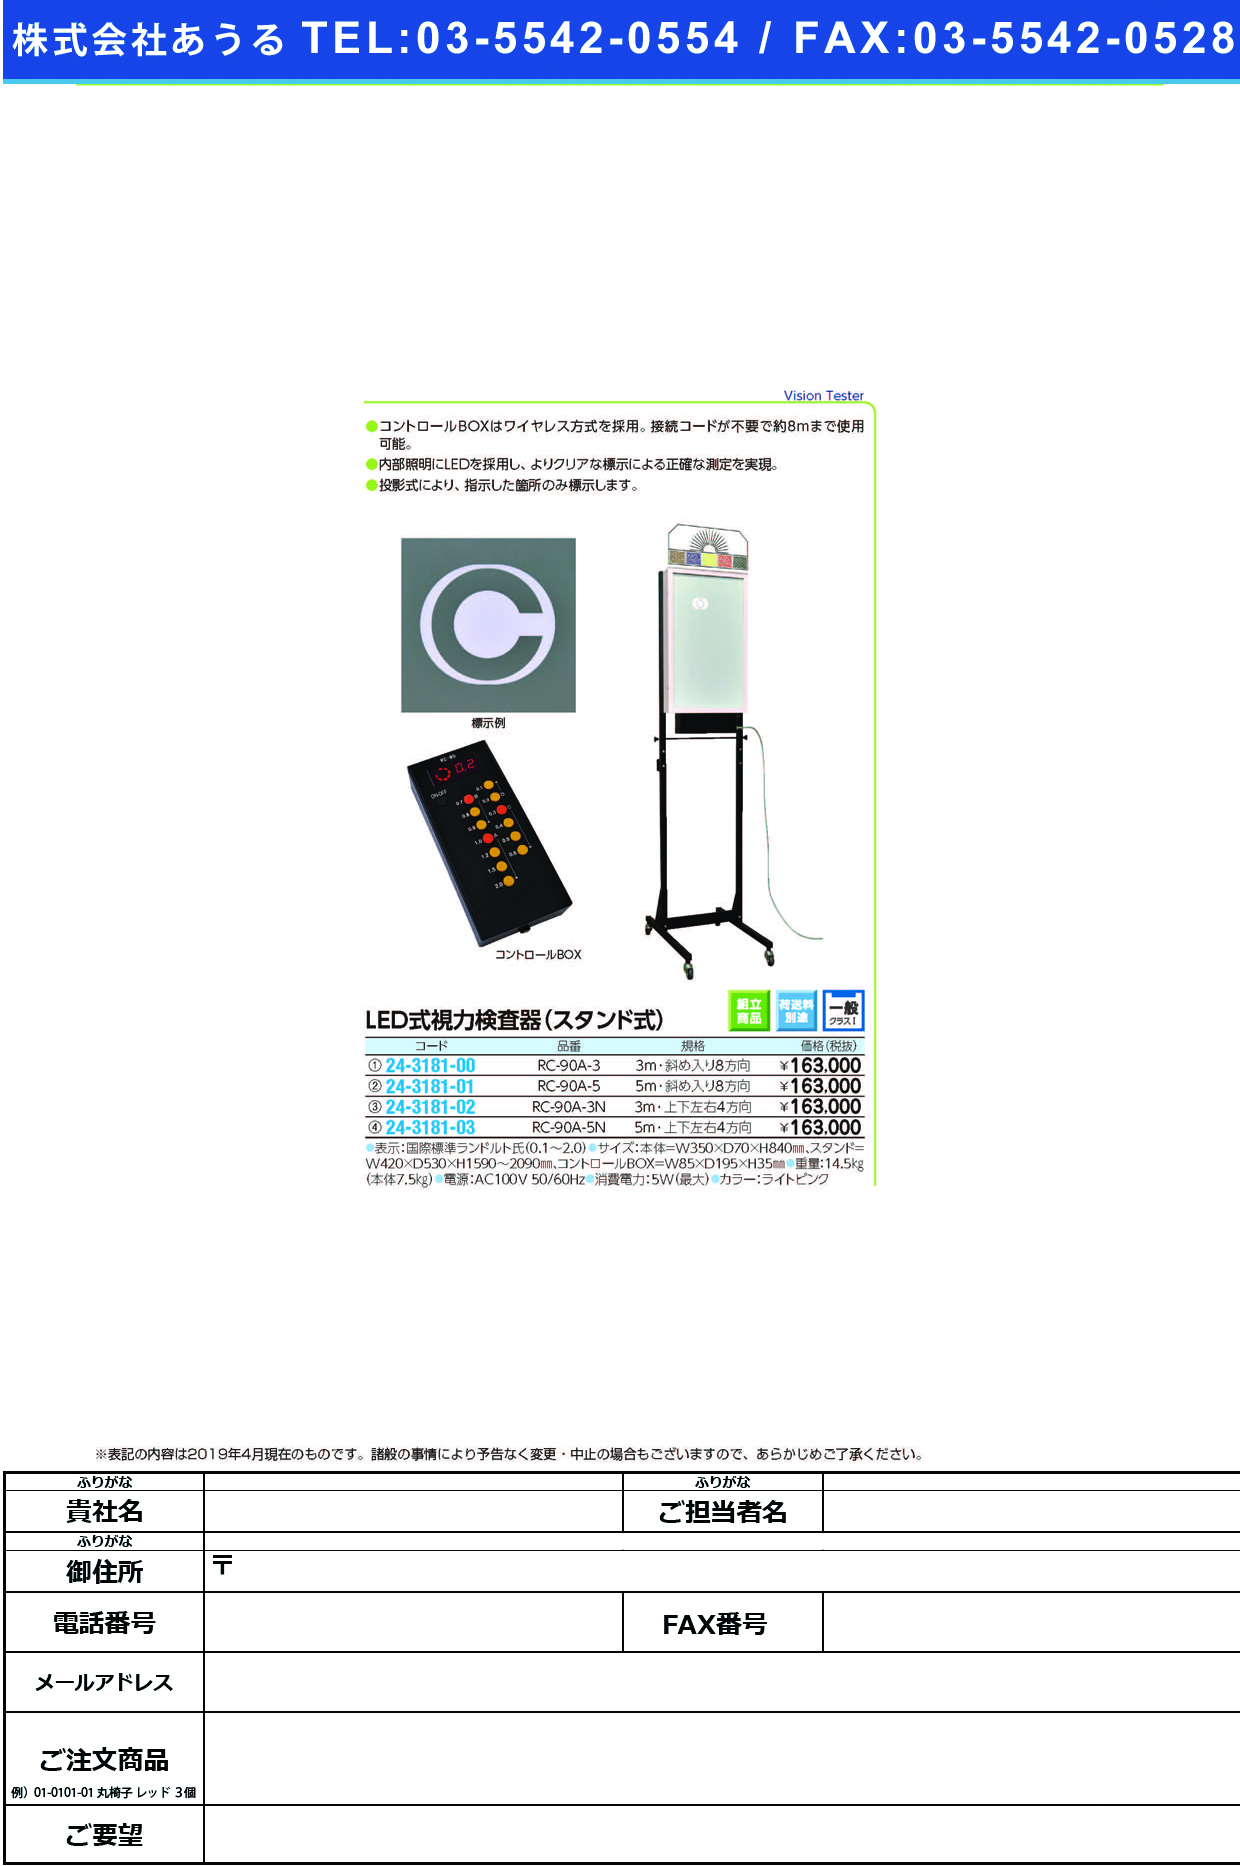 (24-3181-03)ＬＥＤ式視力検査器（スタンド式５ｍ用 RC-90A-5N(4ﾎｳｺｳ) LEDｼｷｼﾘｮｸｹﾝｻｷｽﾀﾝﾄﾞｼｷ【1台単位】【2019年カタログ商品】